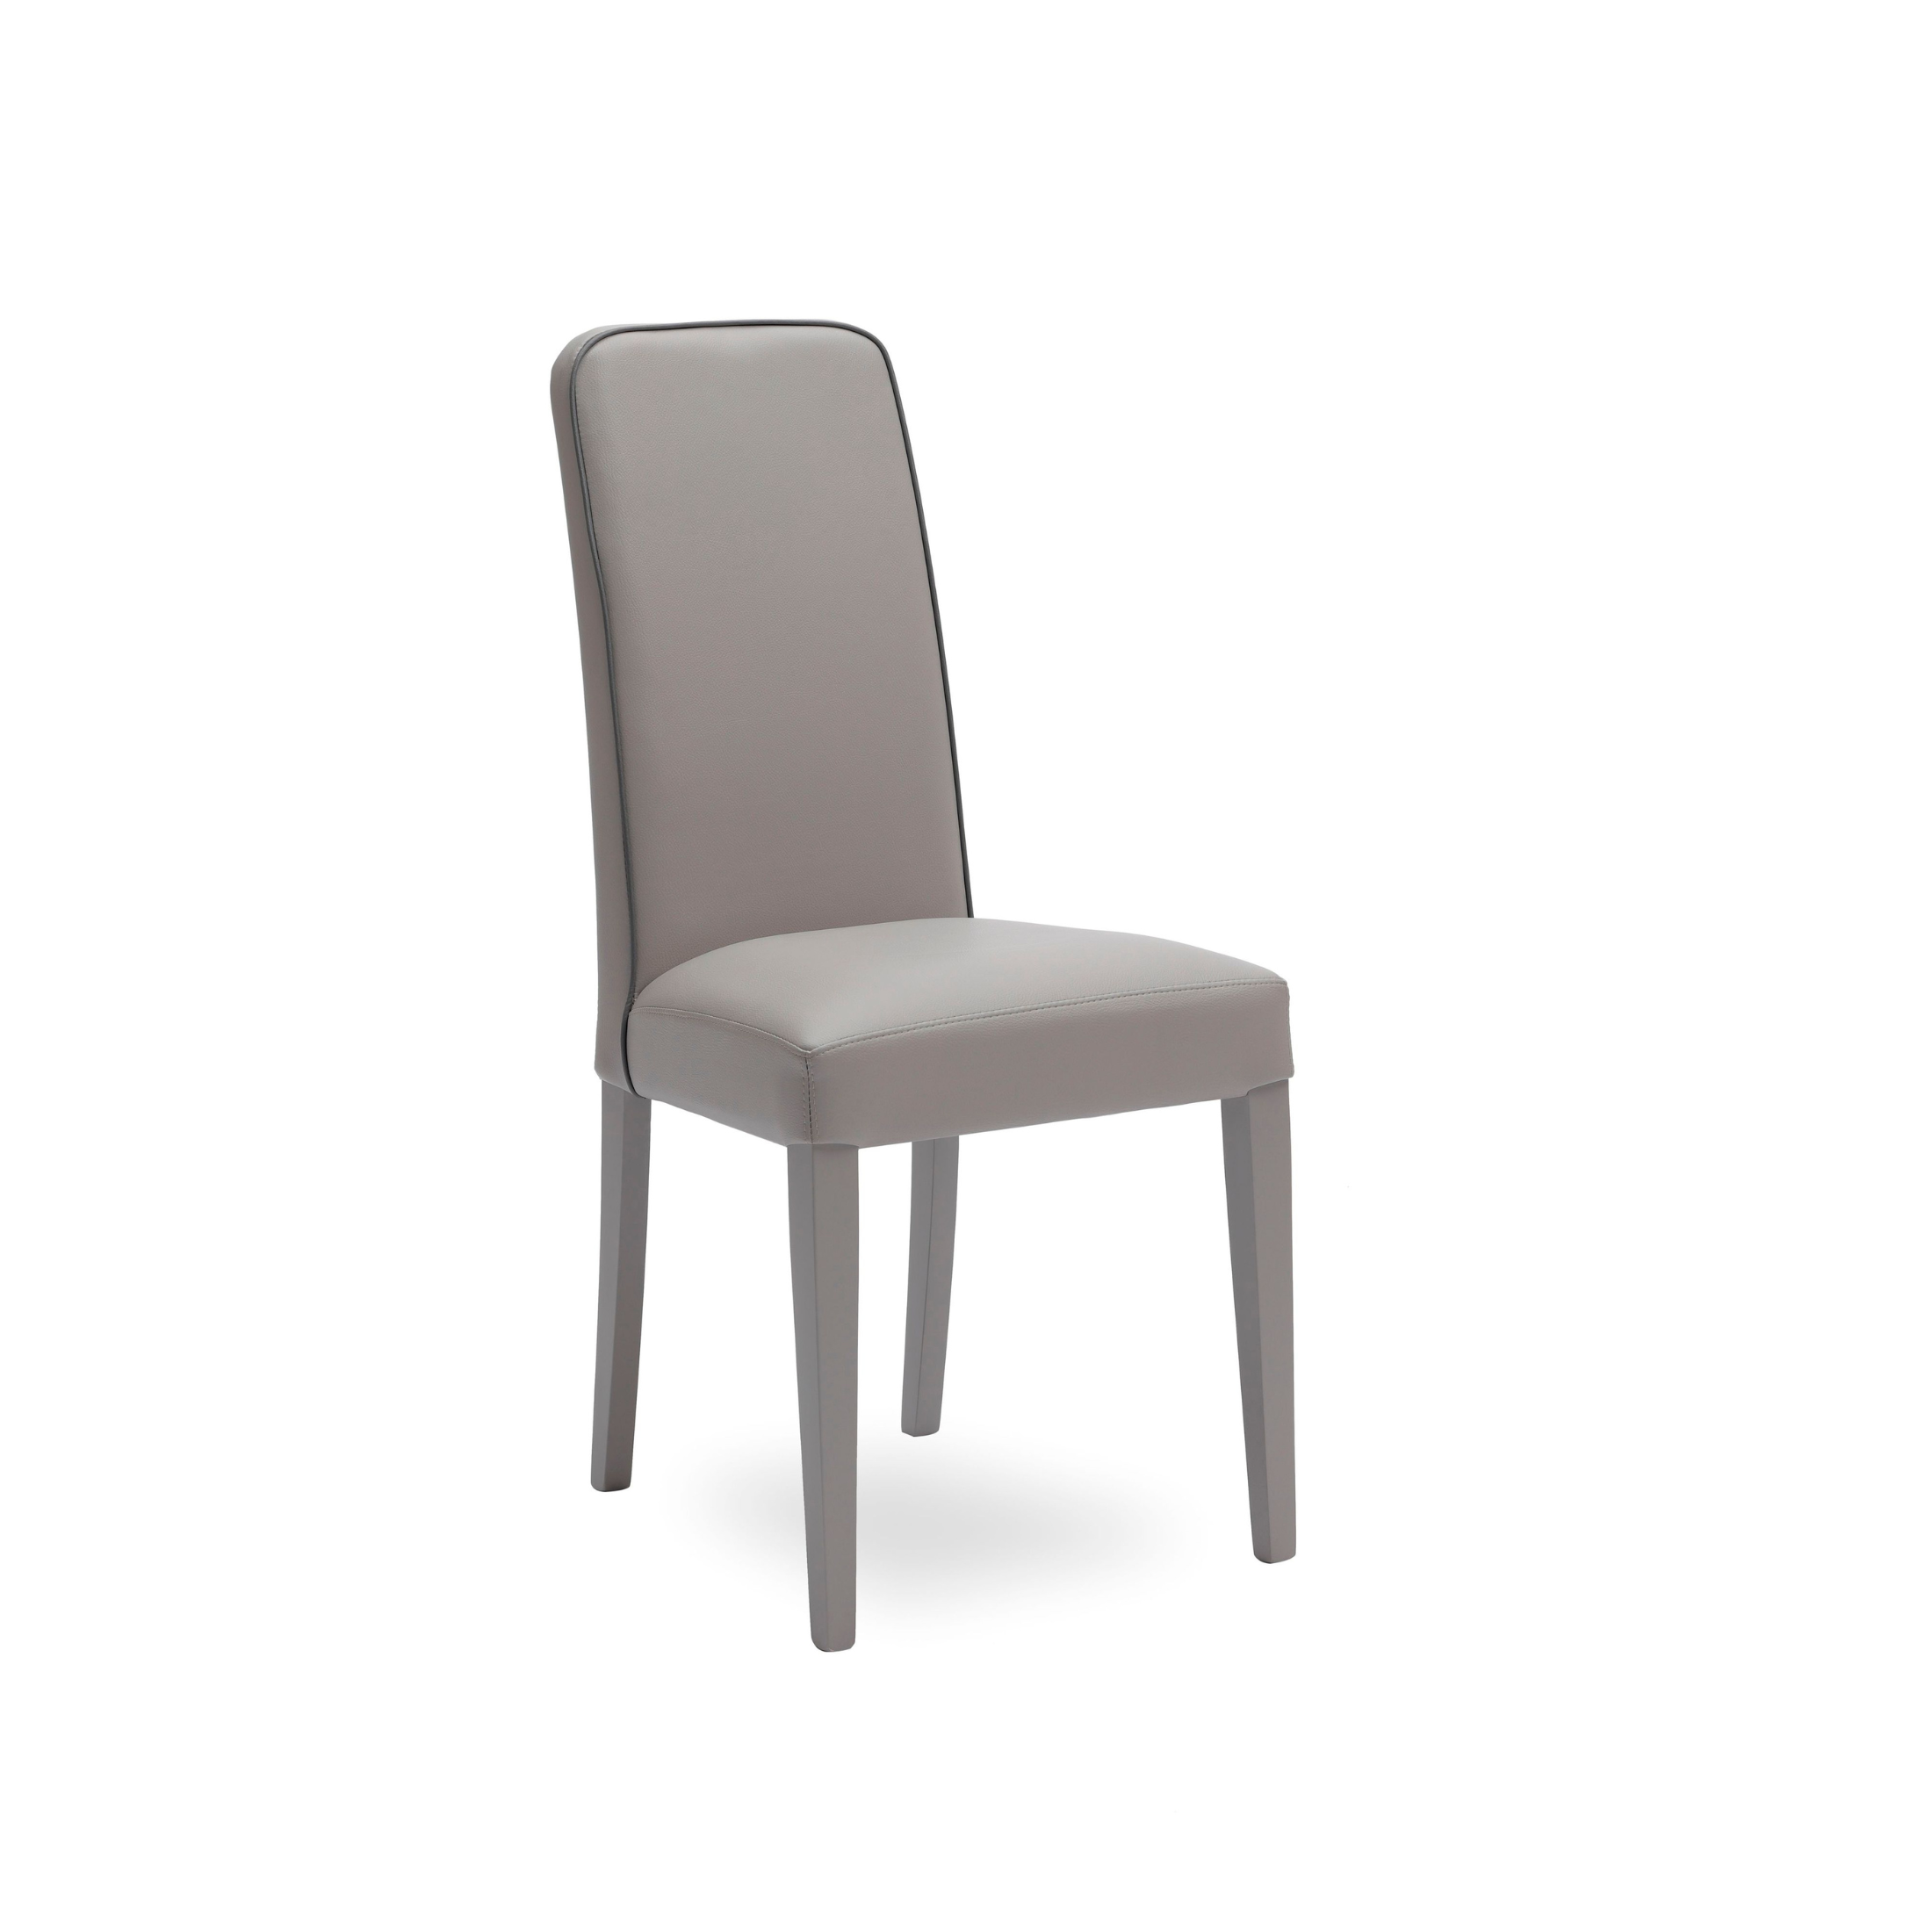 Set di sedie imbottite da soggiorno "Anita" moderne in similpelle cm 46x59 99h